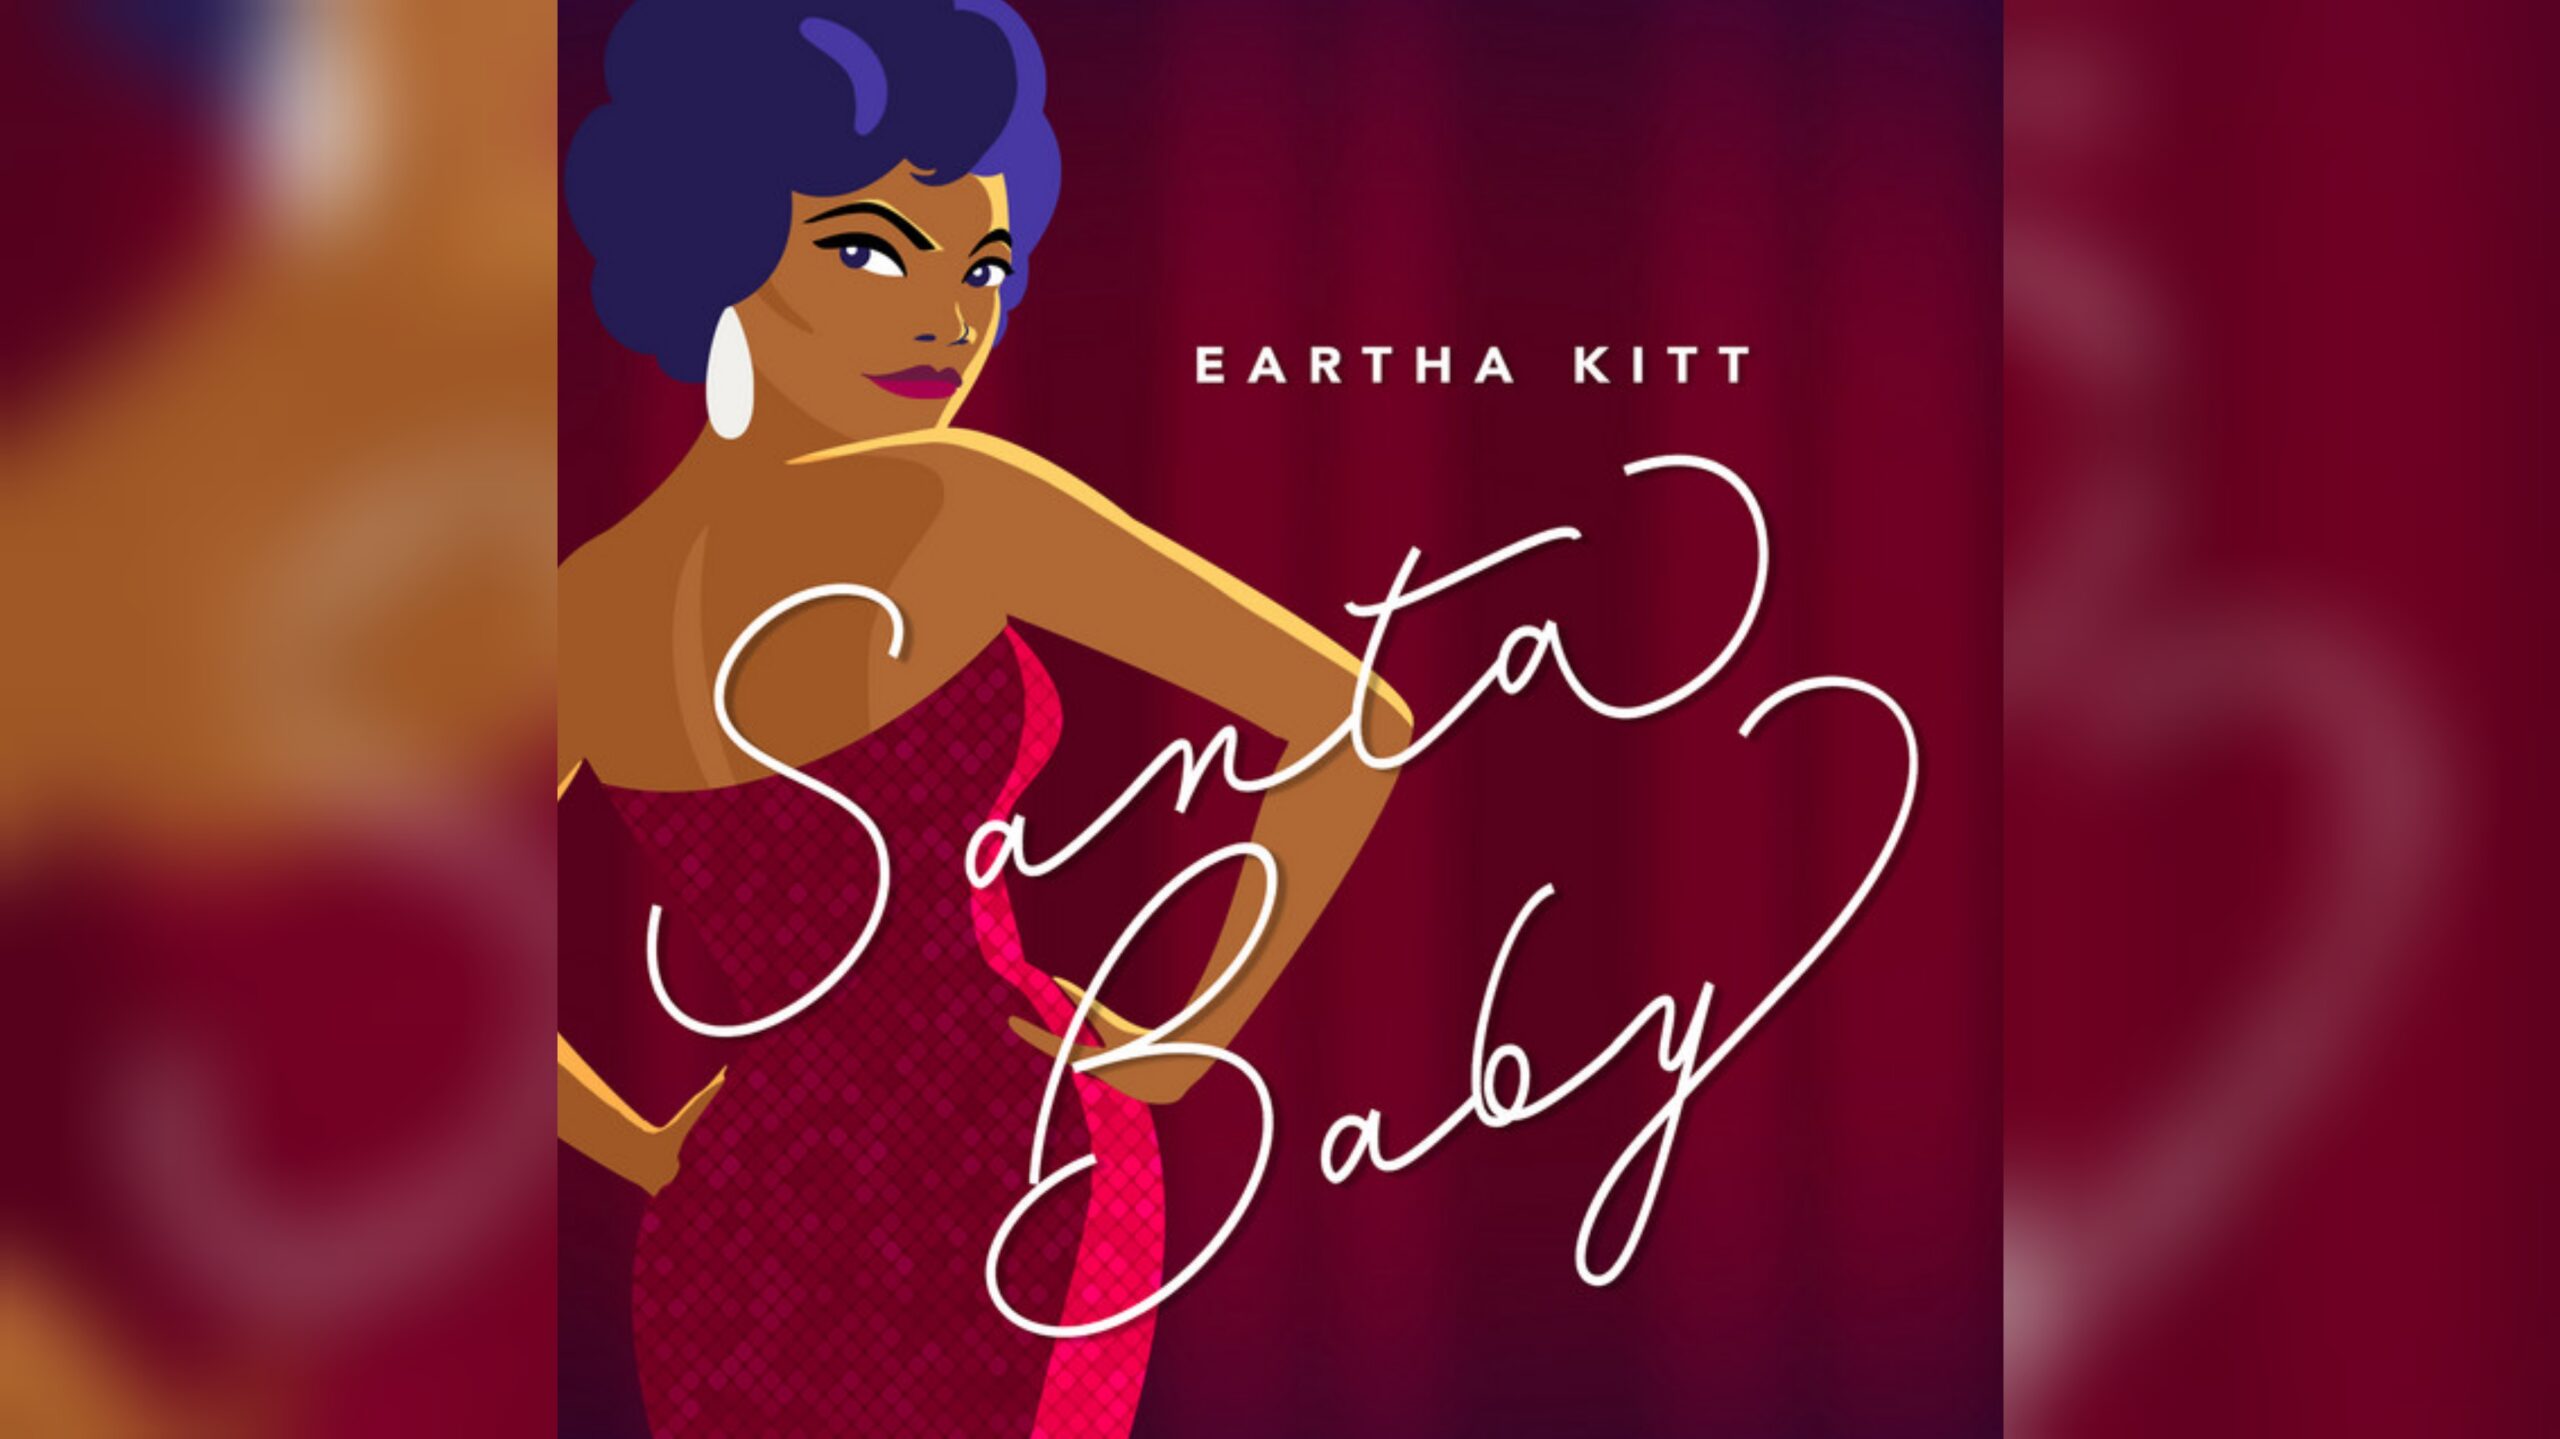 Cover for the single "Santa Baby" by Eartha Kitt